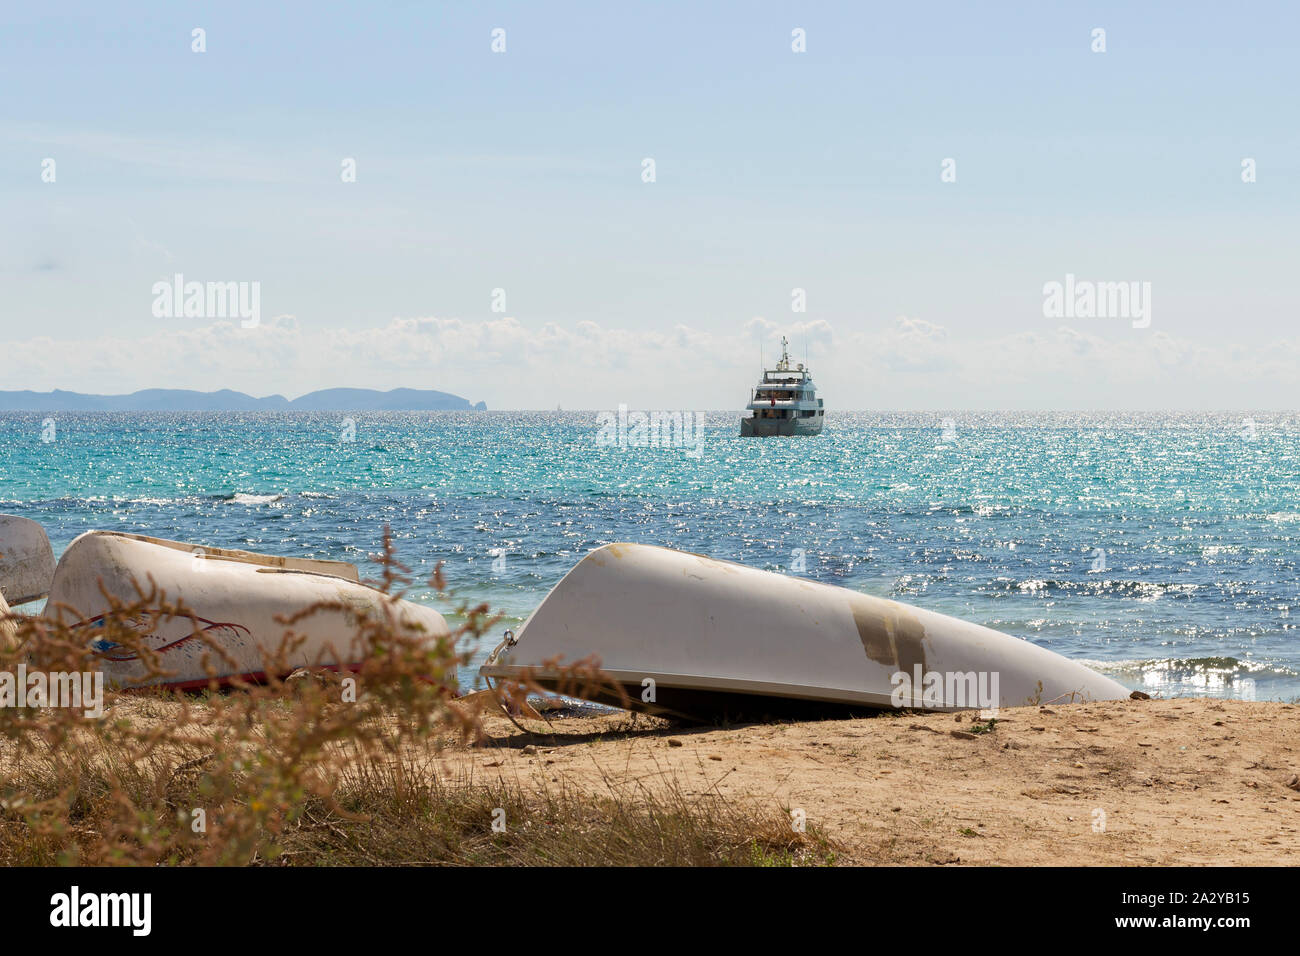 Postkartenmotiv, Mallorca, Yachtcharter, blaues Meer, Urlaub auf Mallorca, Cala Ratjada, Yachtcharter in Meer, dem Strand, Ruderboot am Strand, Fischerboote, Fisch Stockfoto